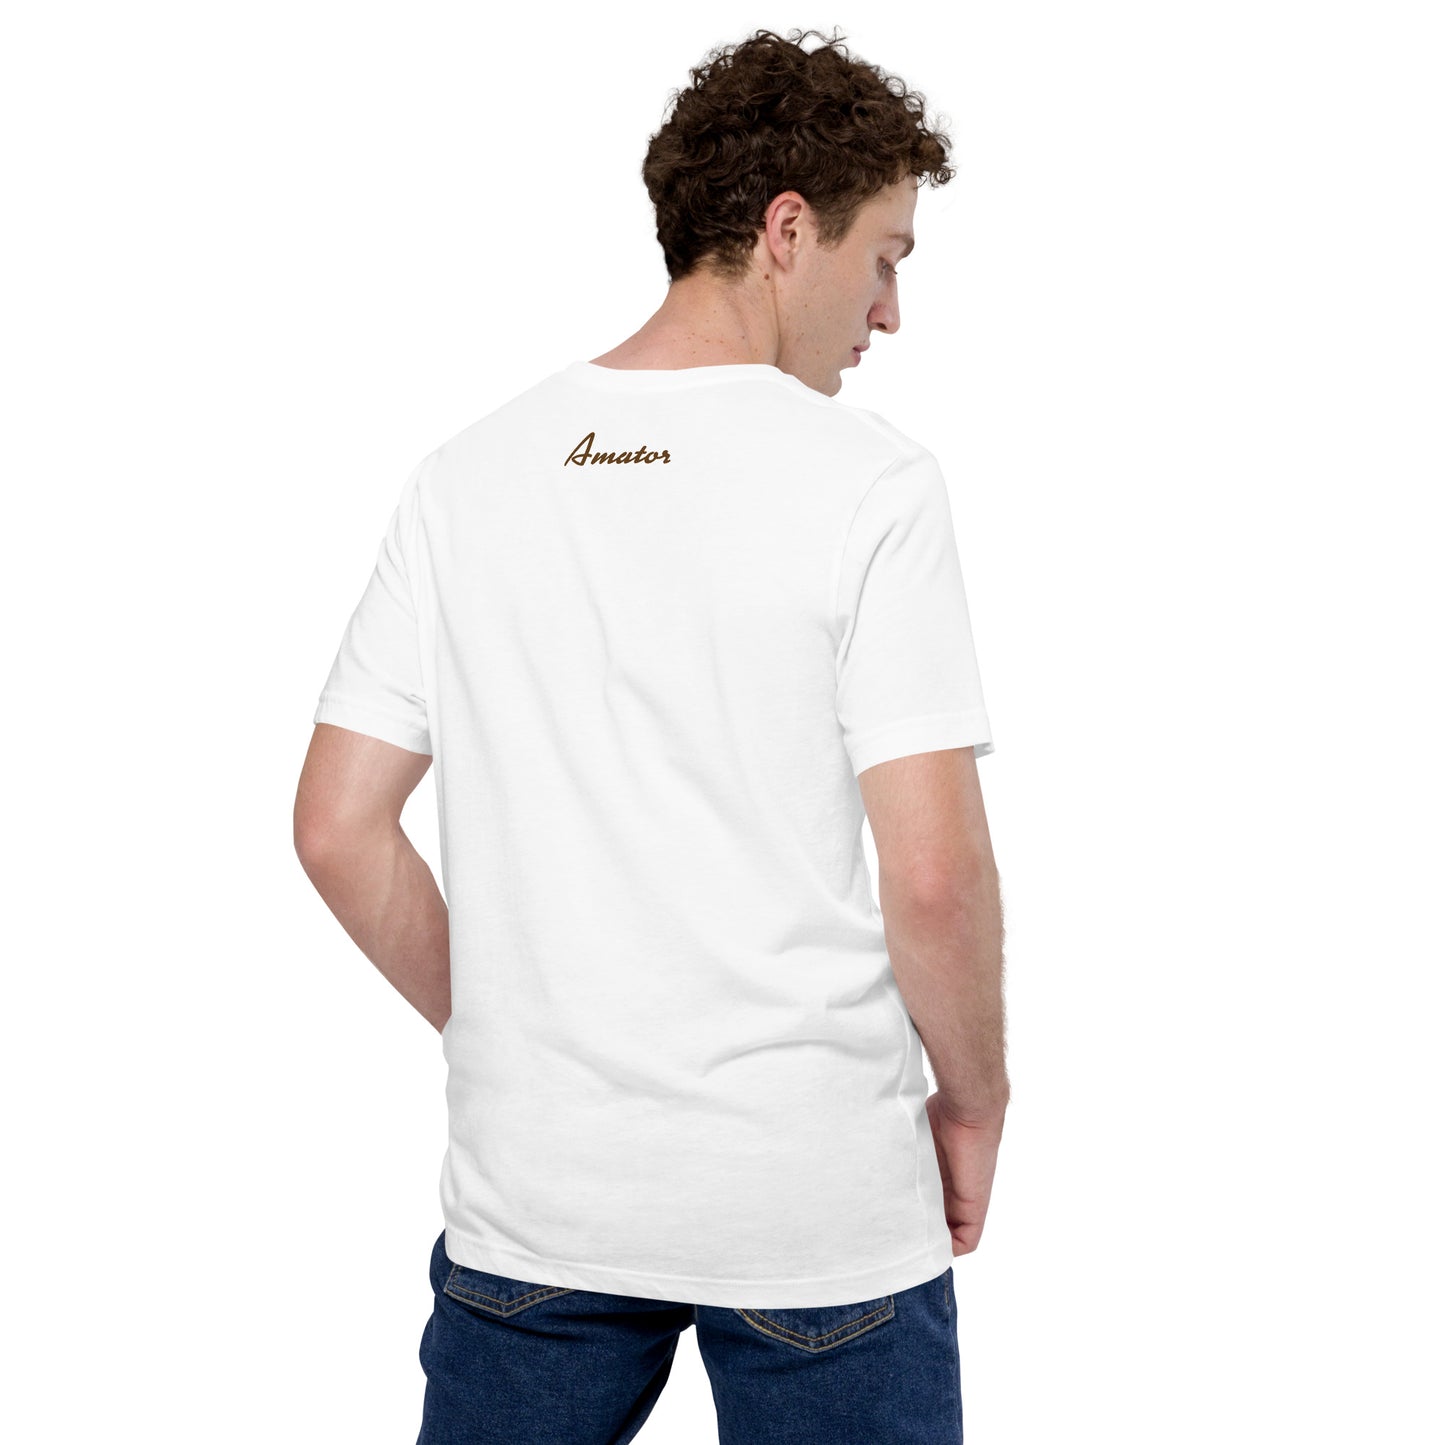 Libra Unisex t-shirt